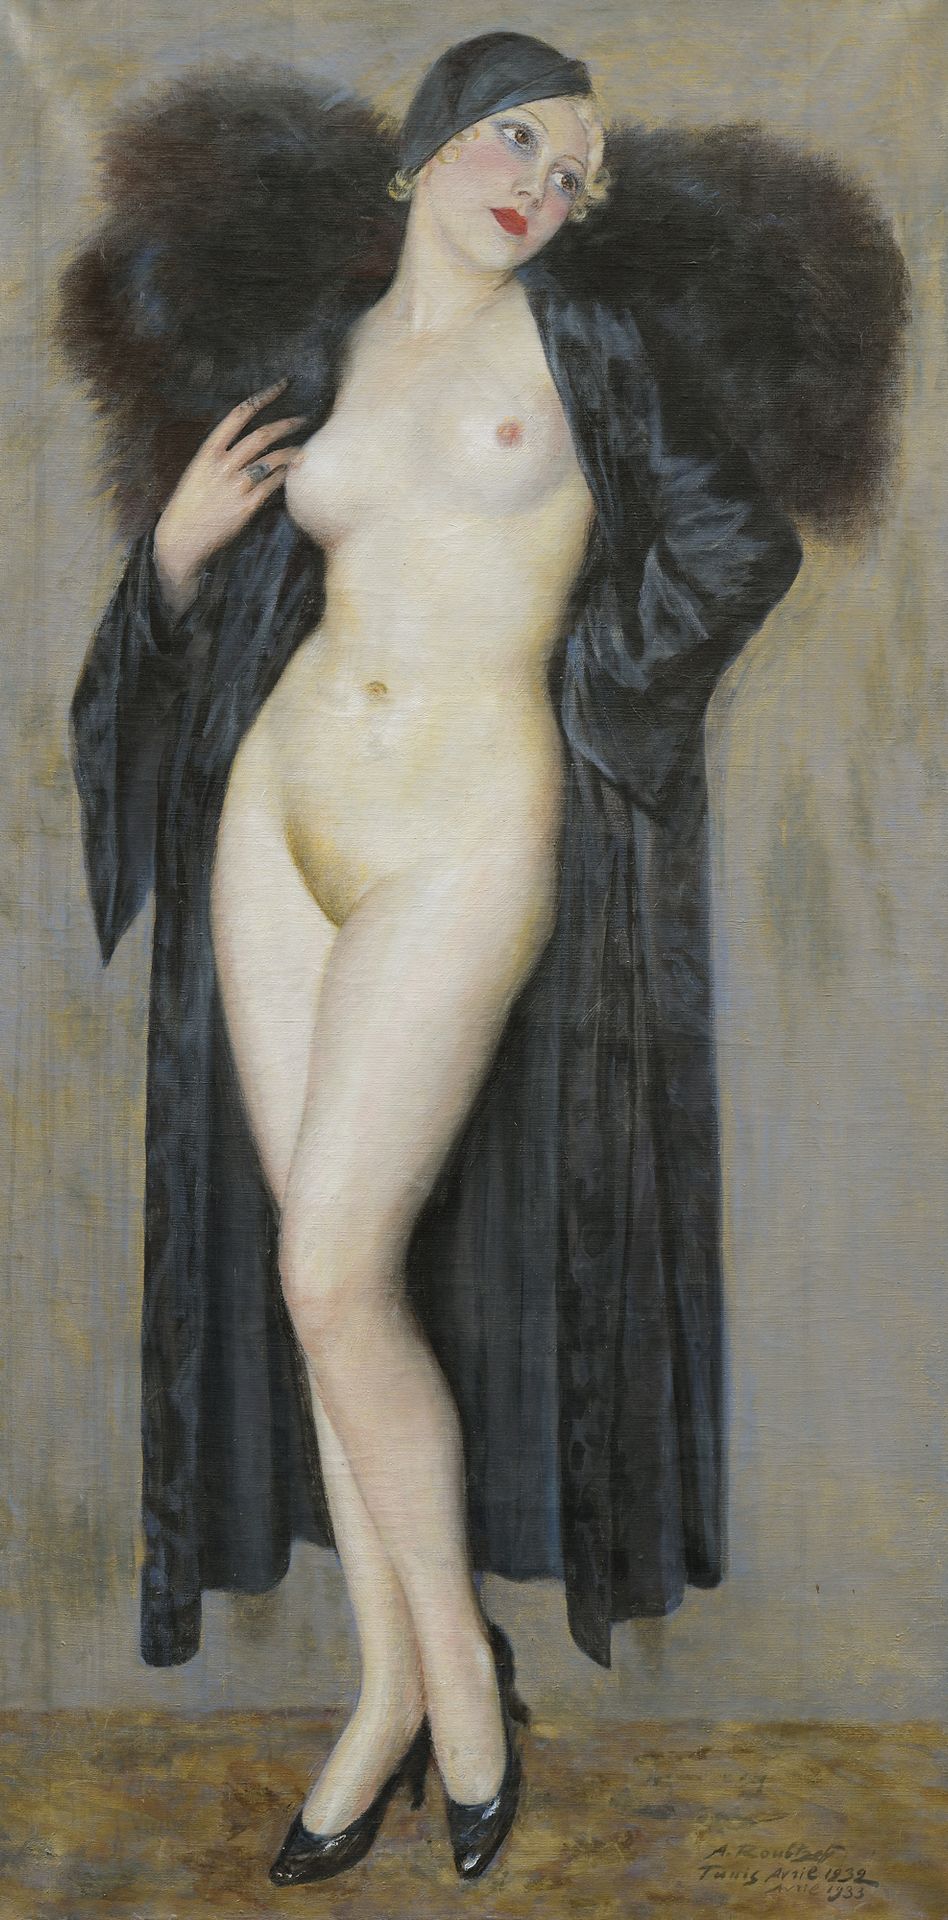 Null 亚历山大-鲁布佐夫 (1884-1949)

1932年4月至1933年4月，突尼斯大衣和毛领下的年轻裸体女子

布面油画。

右下方有签名、位置和日&hellip;